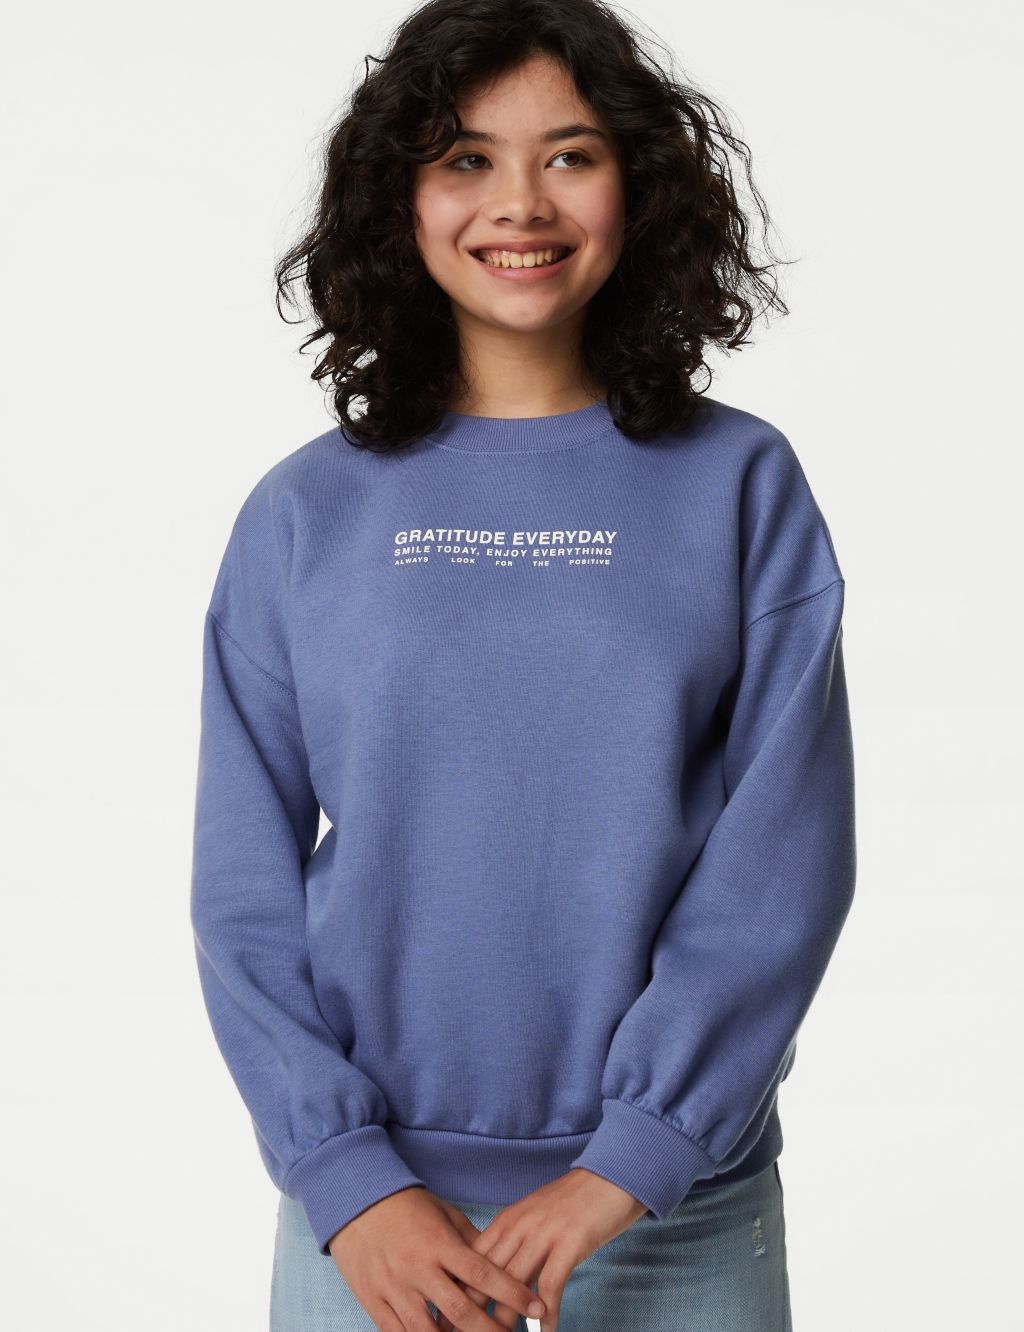 Cotton Rich Slogan Sweatshirt (6-16 Yrs) image 1